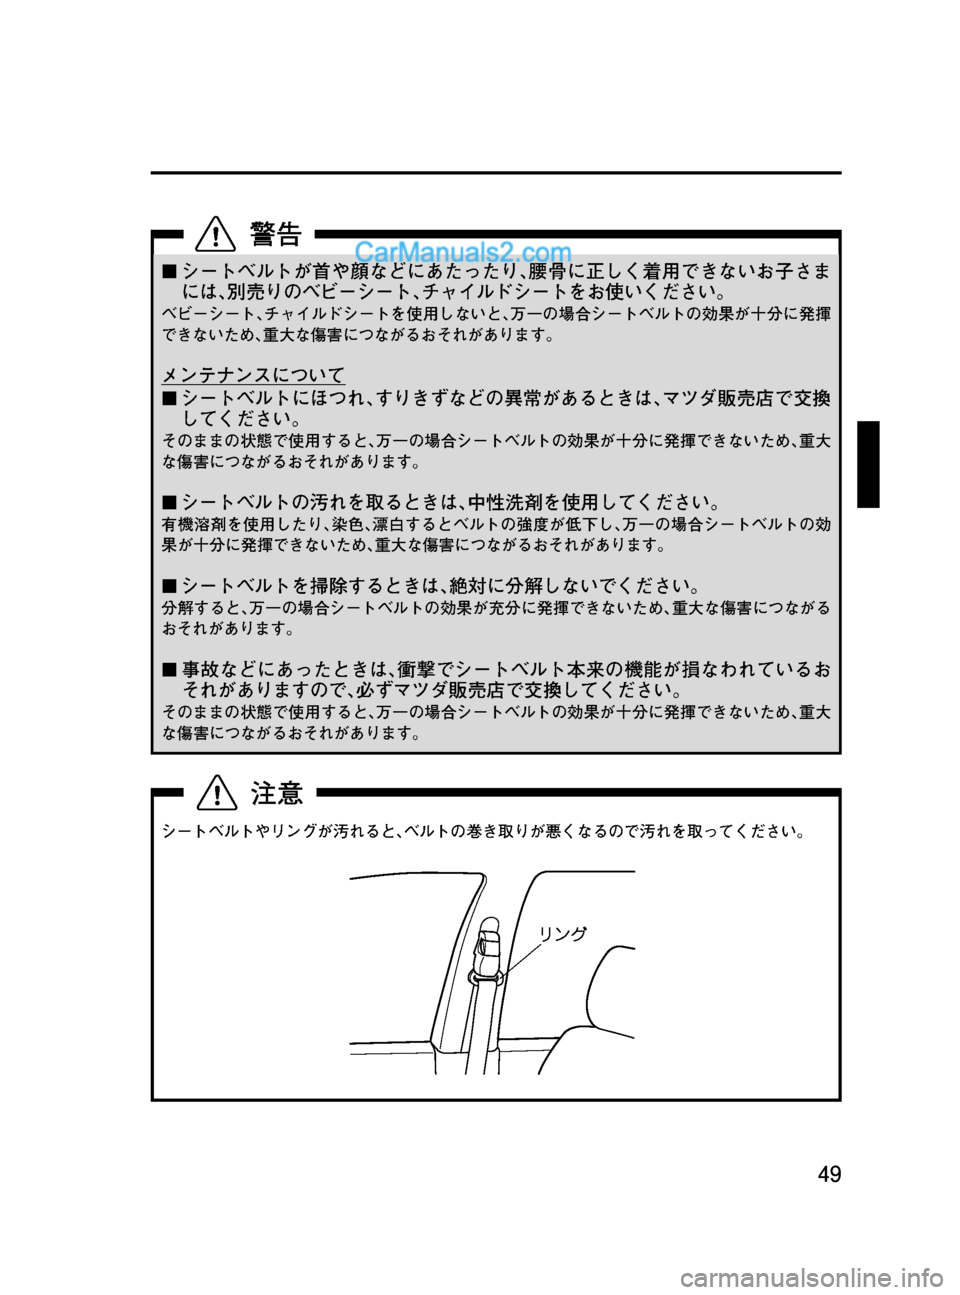 MAZDA MODEL VERISA 2007  ベリーサ｜取扱説明書 (in Japanese) Black plate (49,1)
¢シートベルトが首や顔などにあたったり､腰骨に正しく着用できないお子さま
には､別売りのベビーシート､チャイルドシートをお�